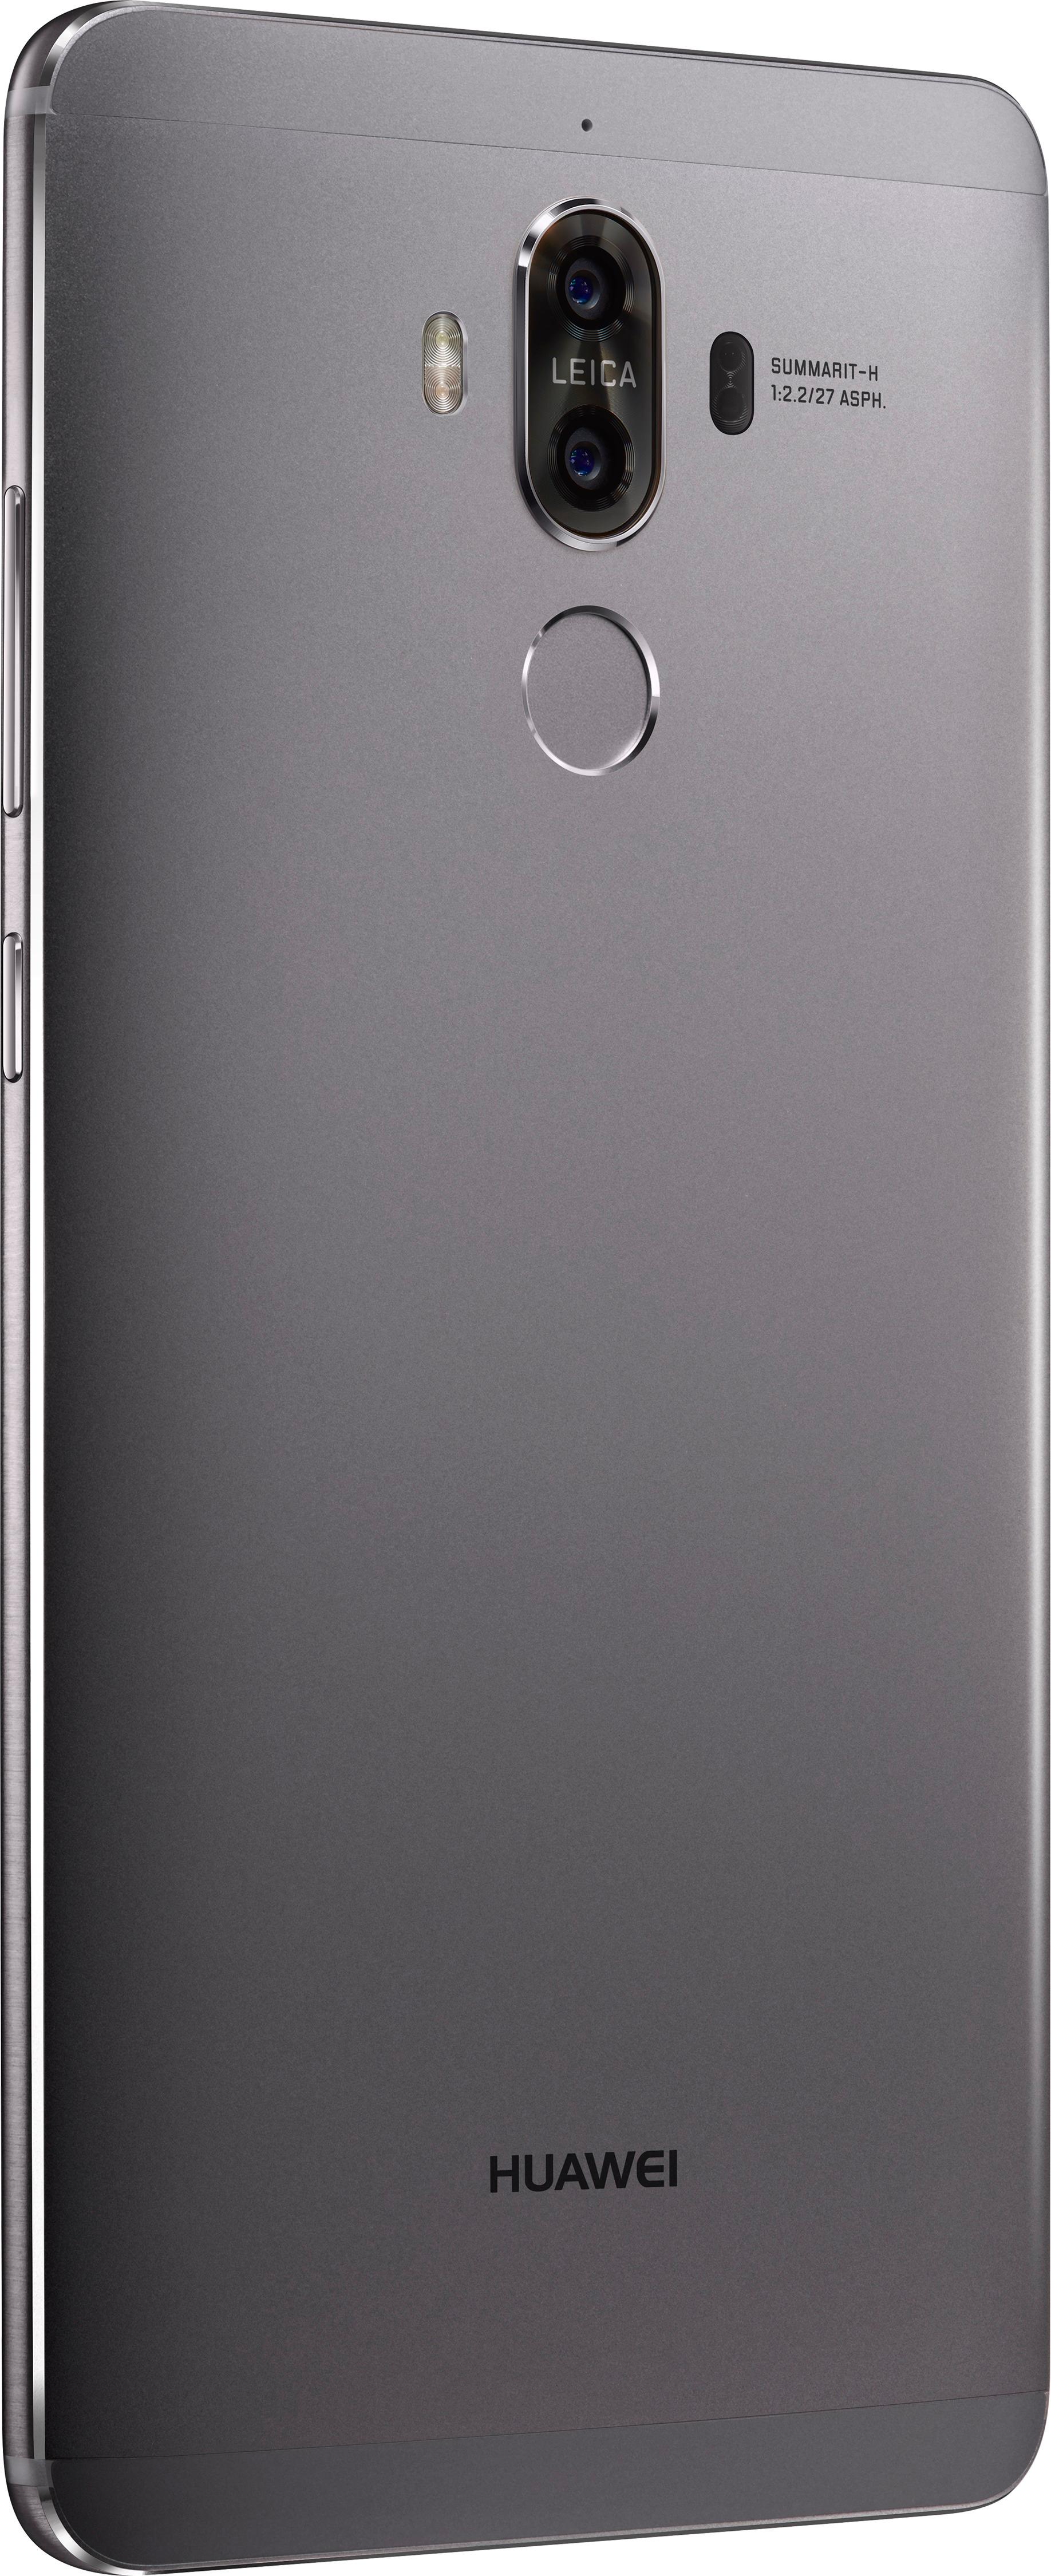 Rang werkplaats neef Best Buy: Huawei Refurbished Mate 9 4G LTE with 64GB Memory Cell Phone  (Unlocked) Space Gray RFRB-MHA-L29